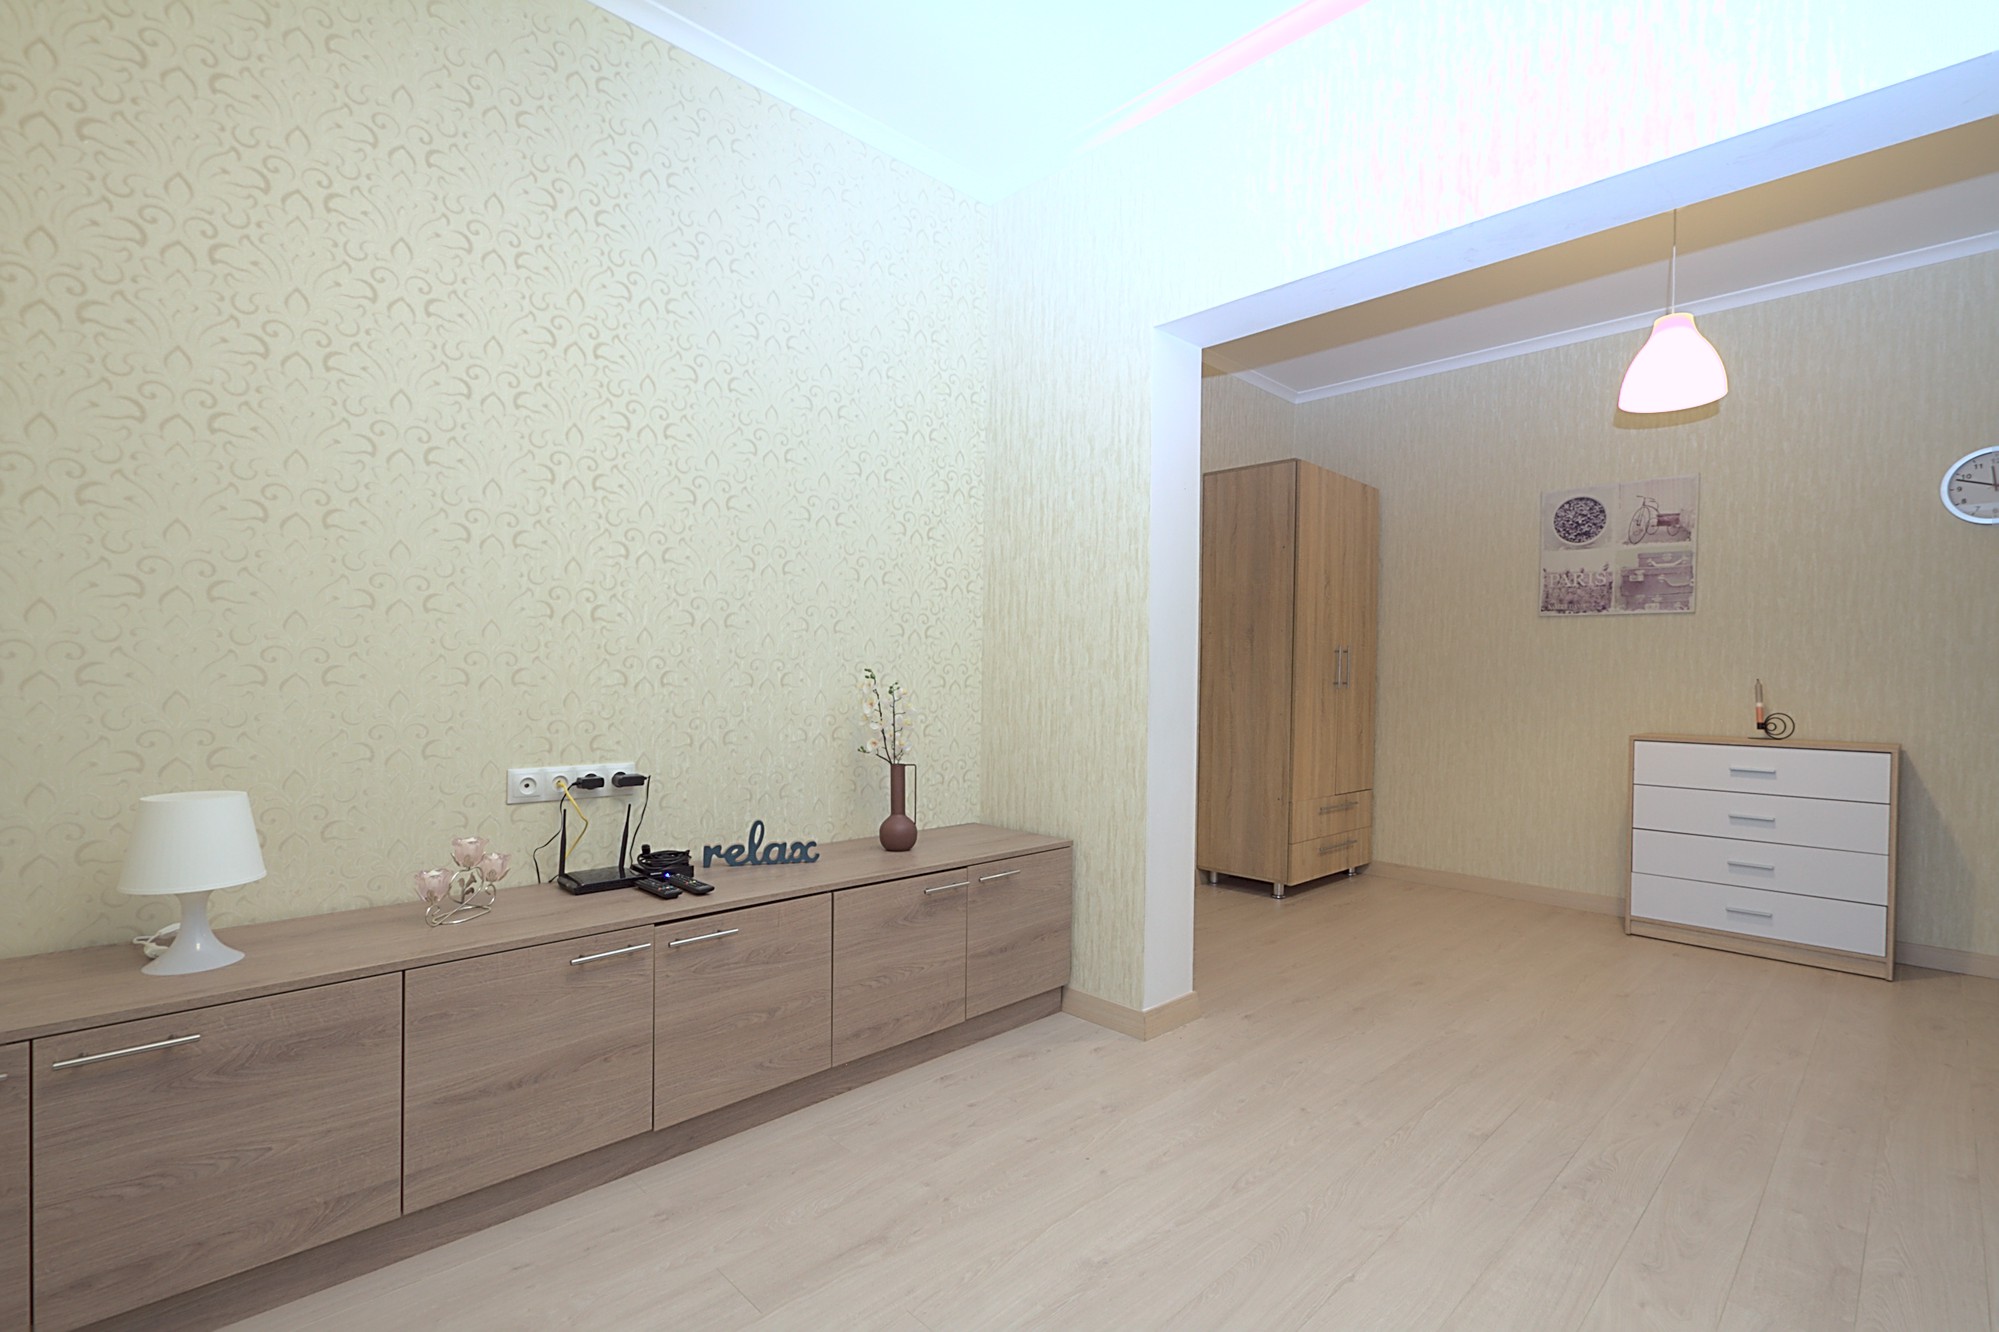 Elegance Trio este un apartament de 3 camere de inchiriat in Chisinau, Moldova